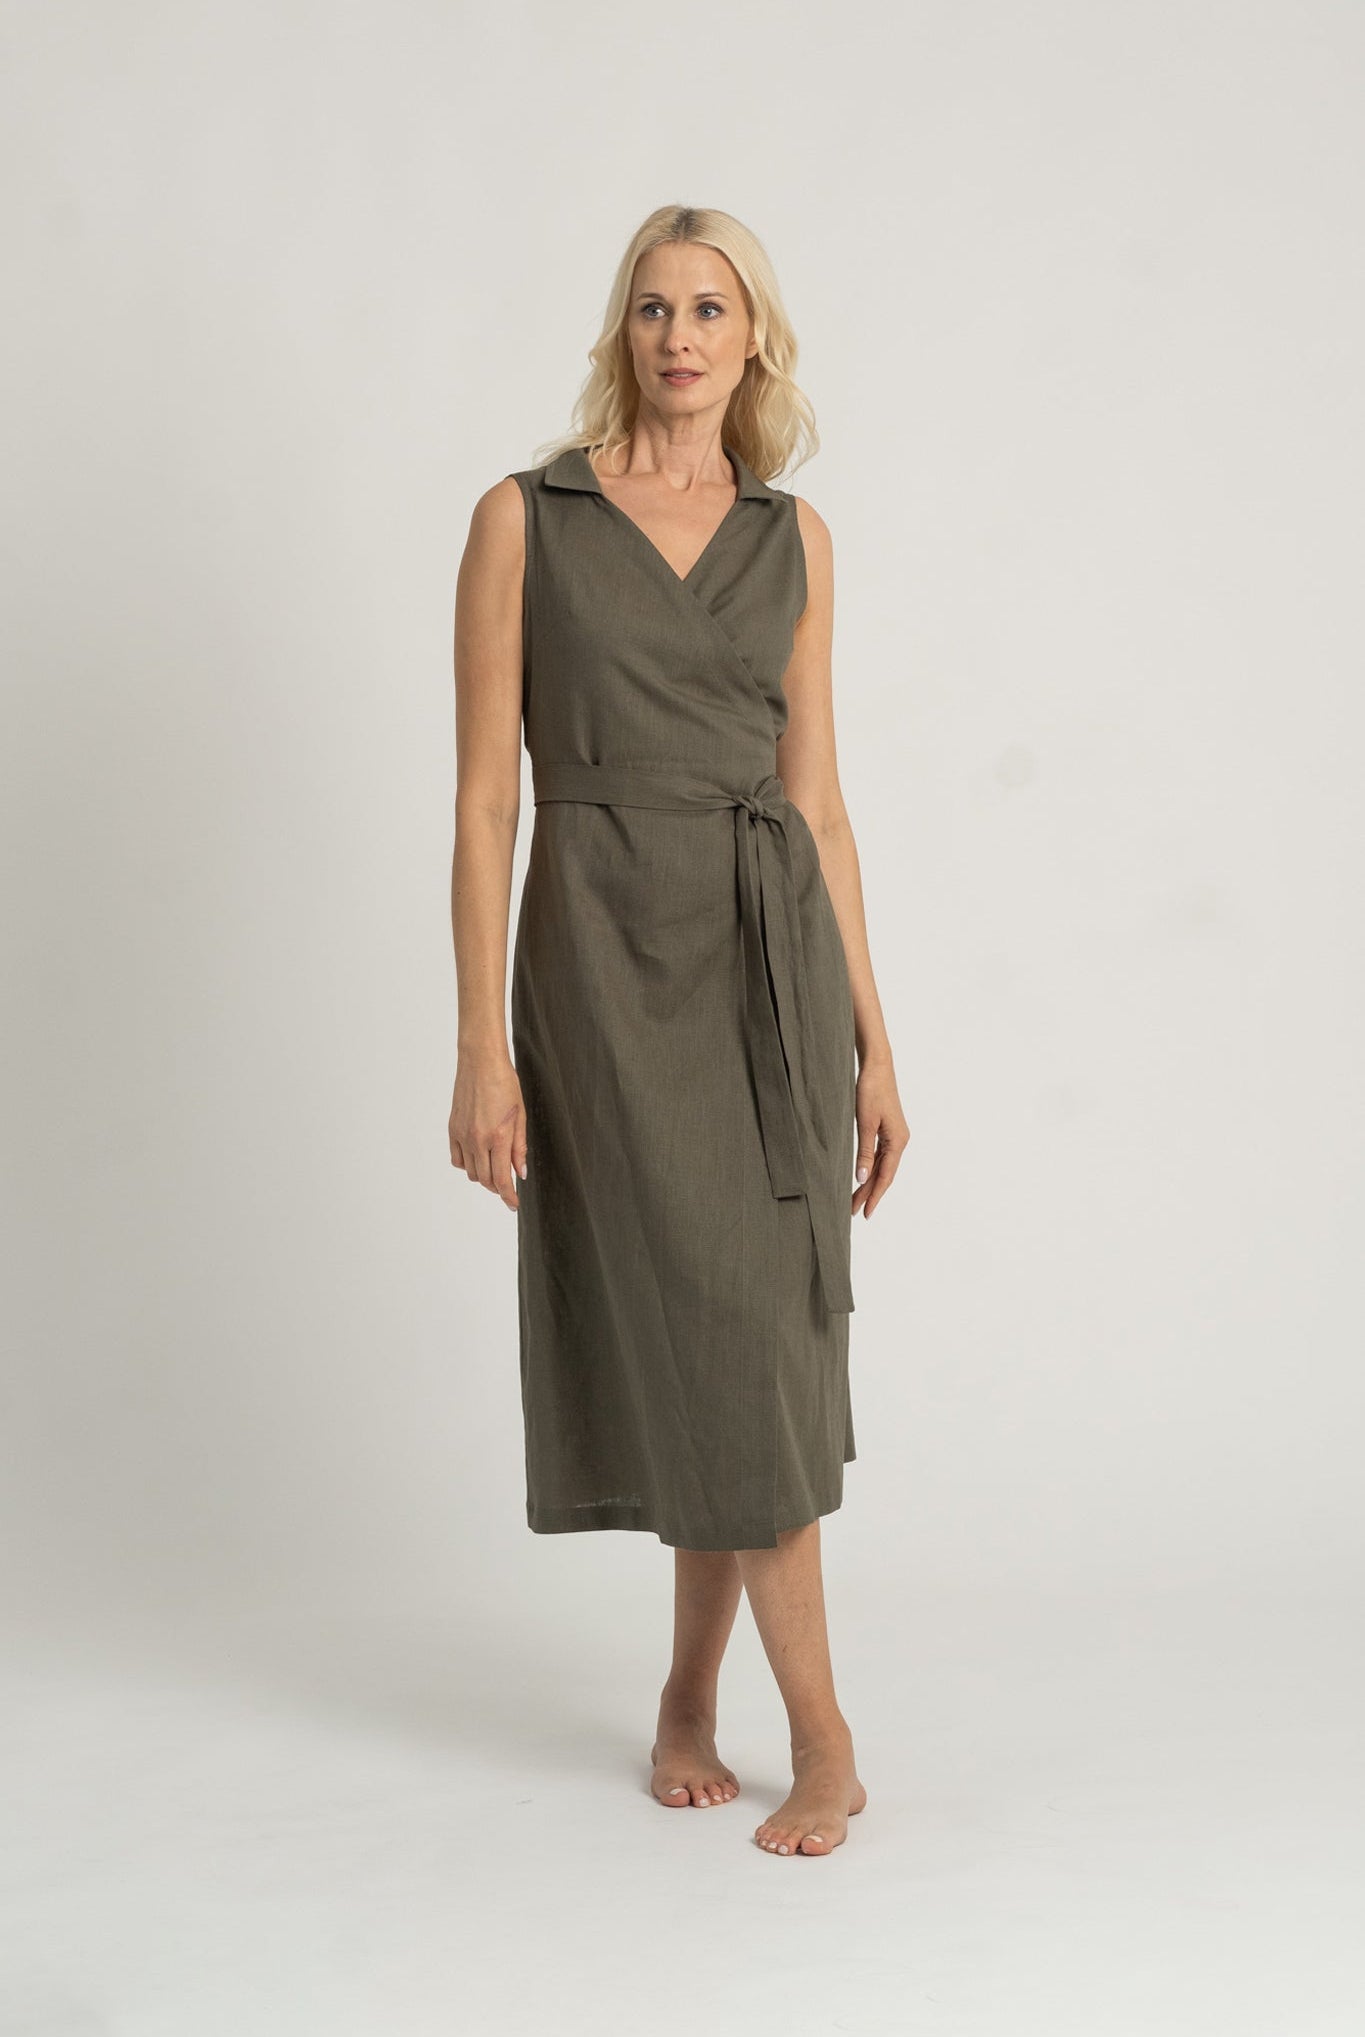 European 100% Linen Dress M Size Woman Unique Fashion Design, Eco Friendly  Look Hemp Clothing Flax Asymmetrical Art to Wear Linen Clothing 7 